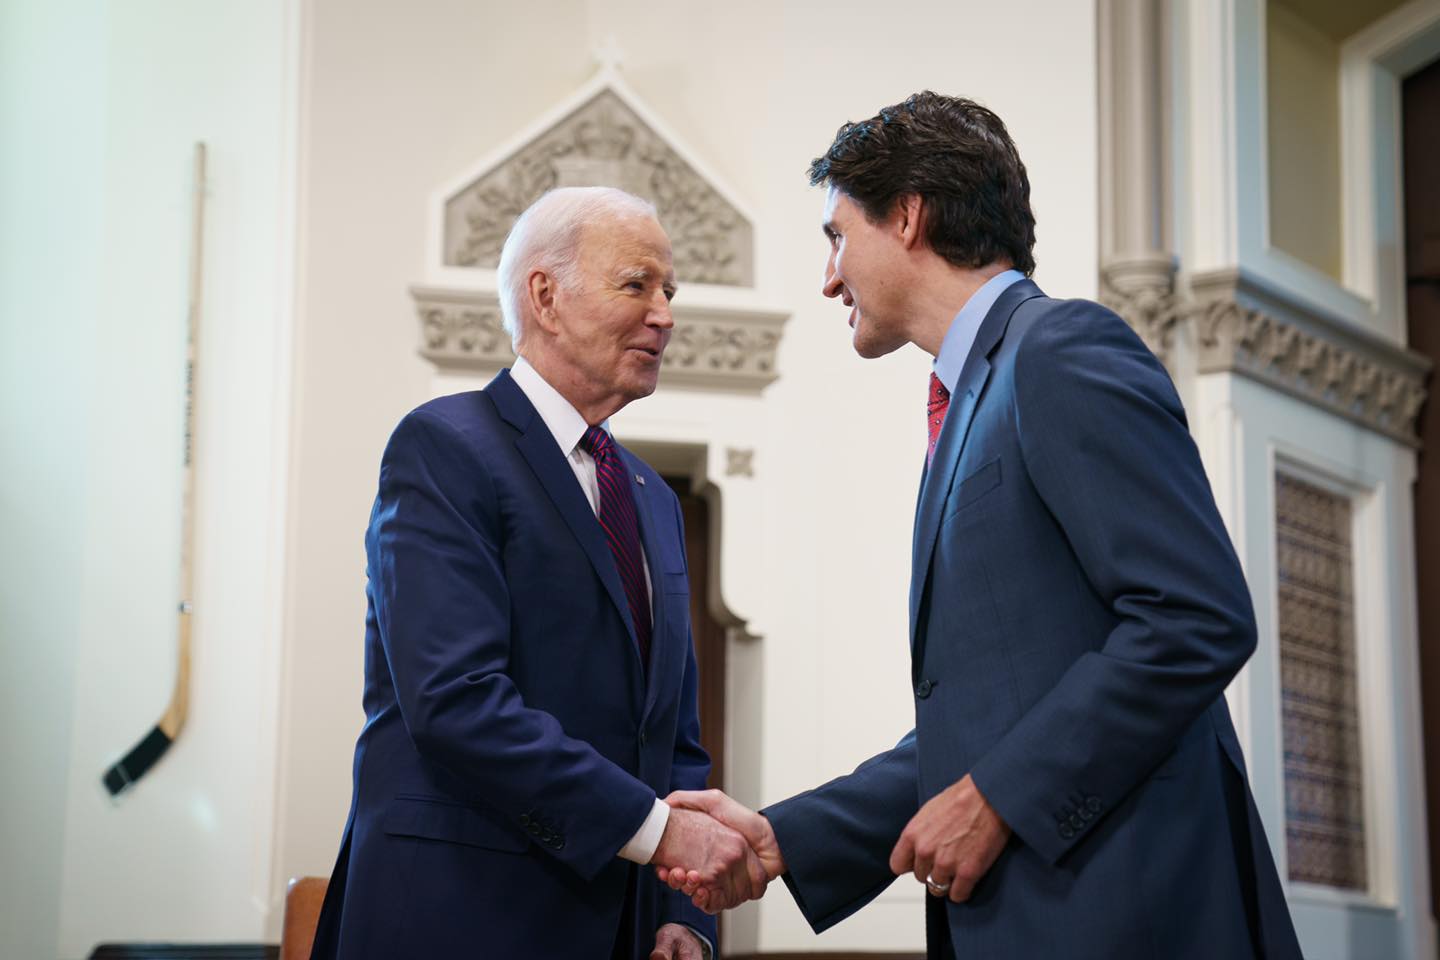 Trudeau and Biden shaking hands